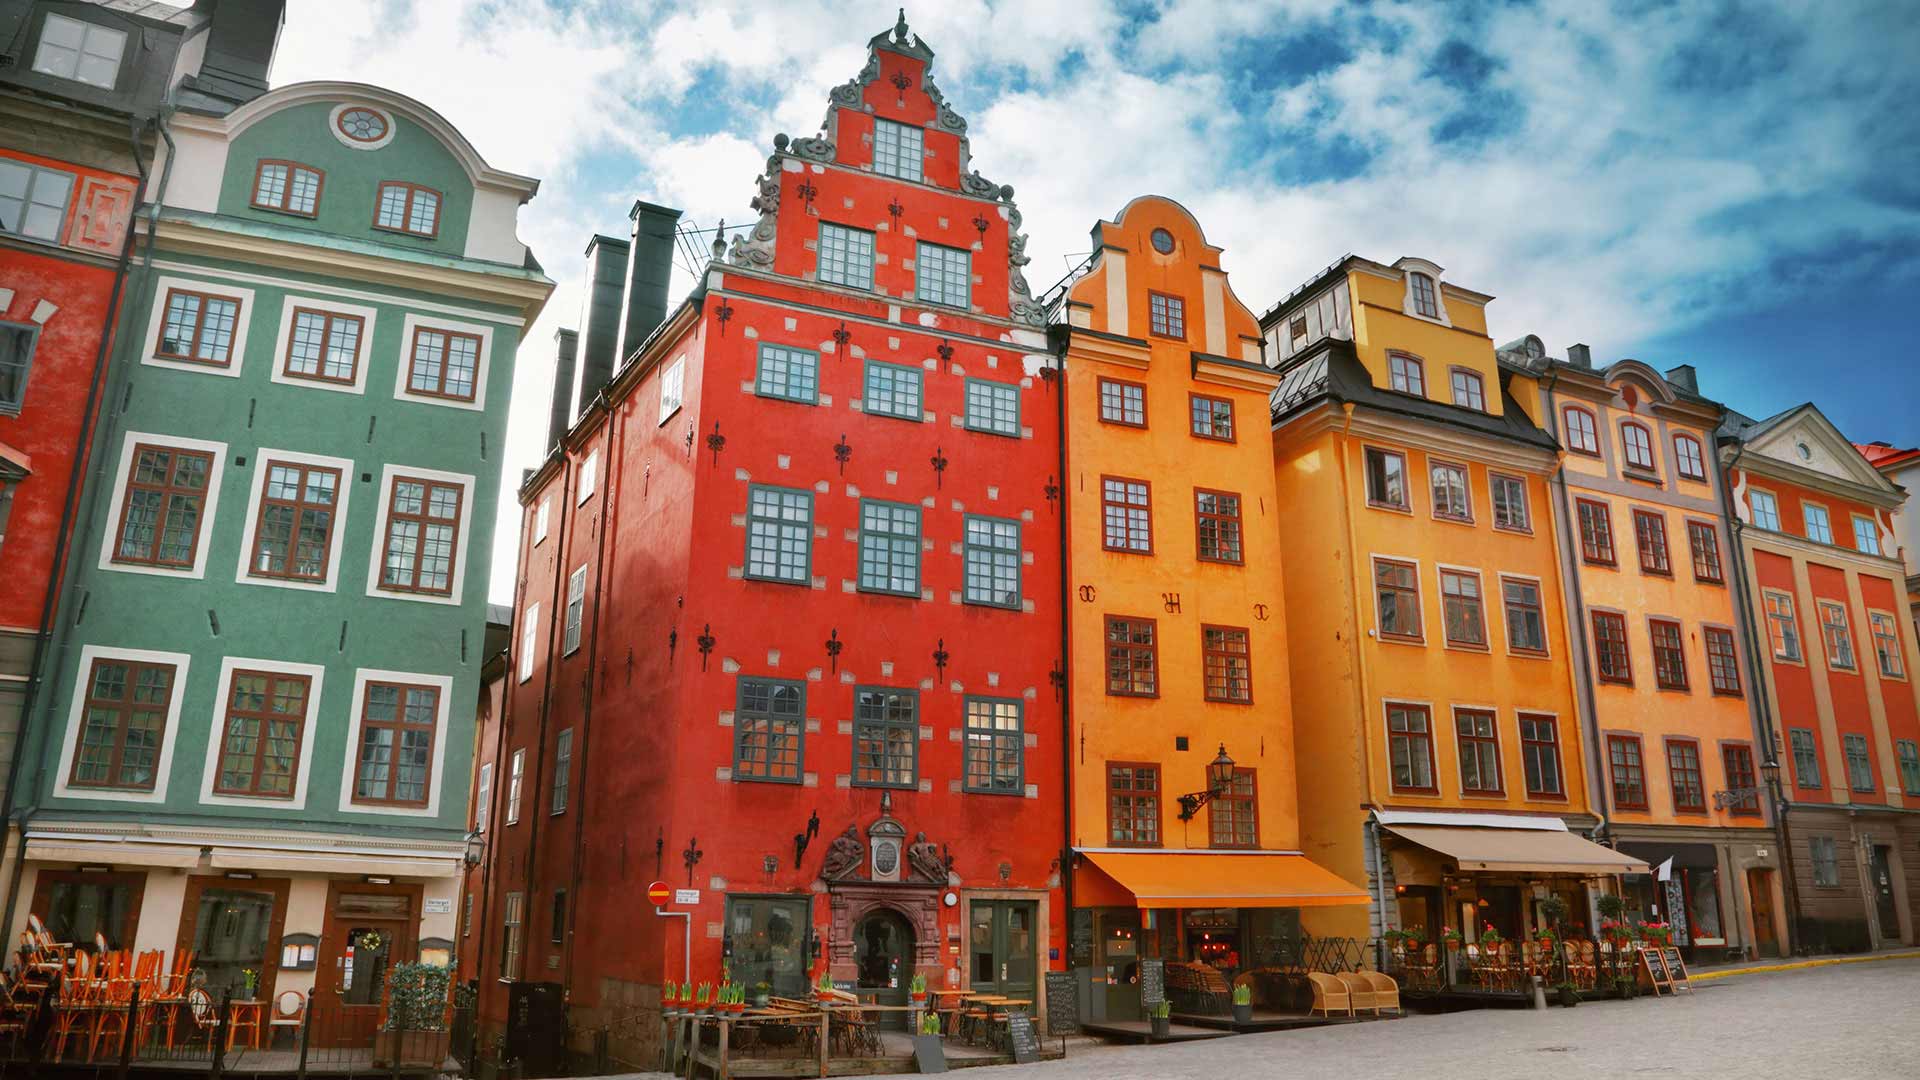 Old Town - Gamla Stan in Stockholm, Sweden